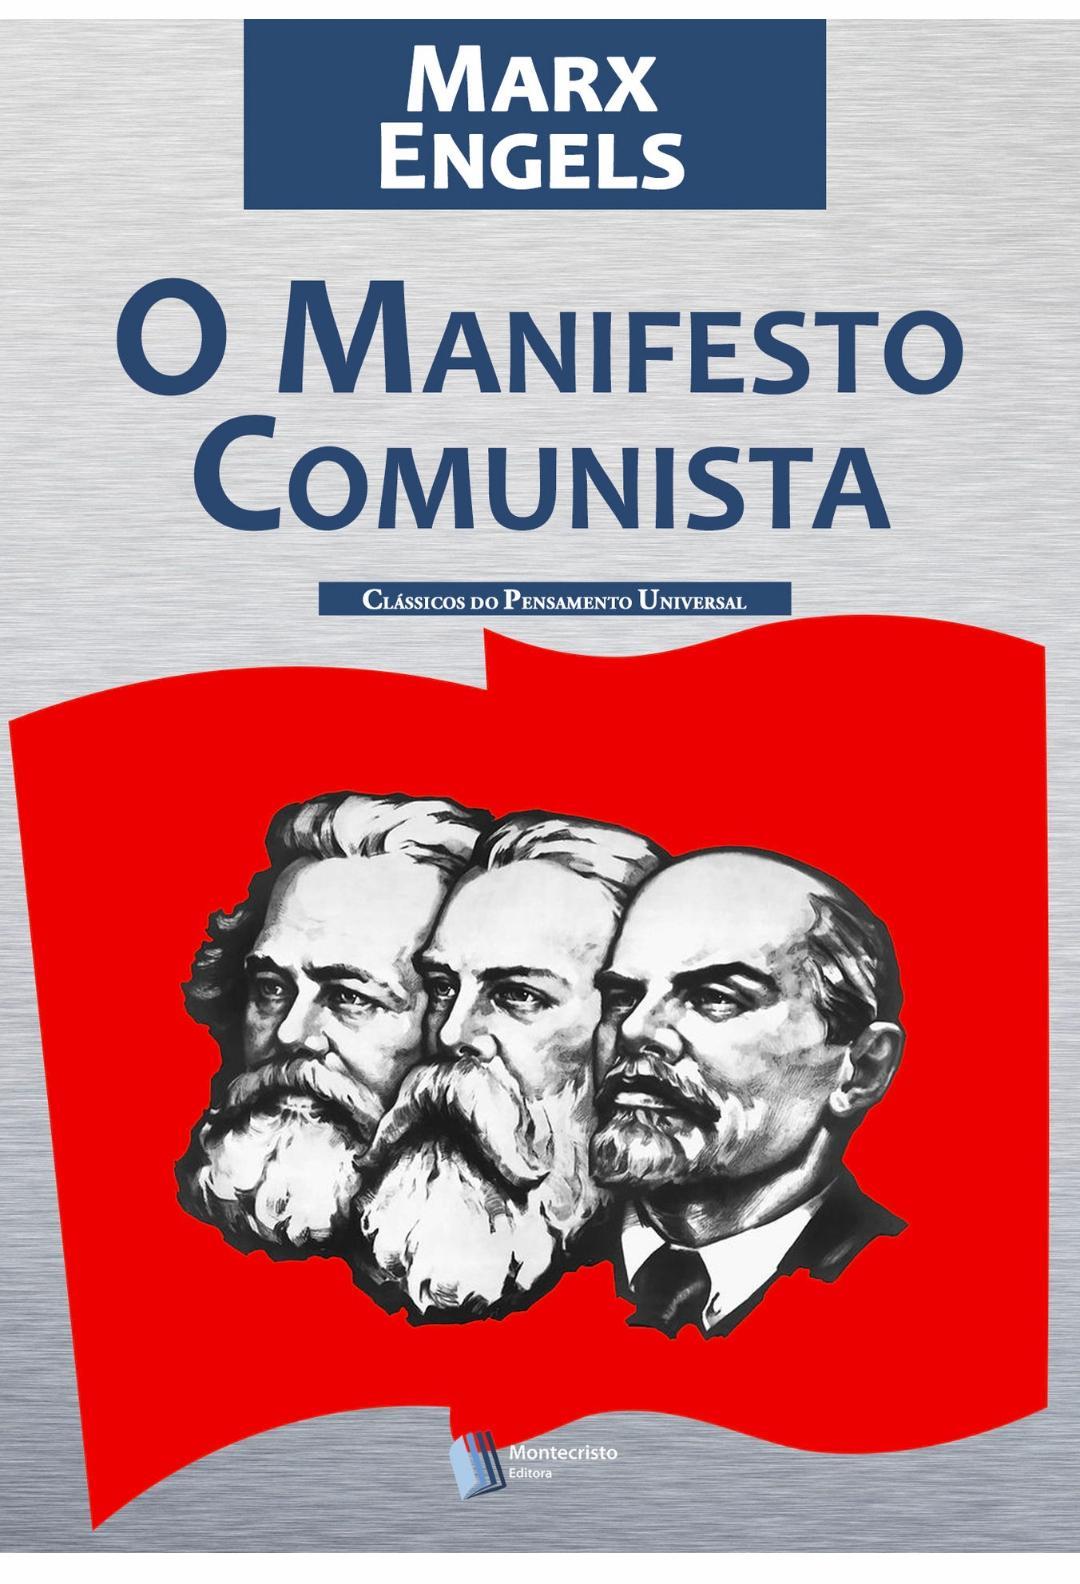 Karl Marx, Friedrich Engels: O MANIFESTO COMUNISTA (Portuguese language, 2012, Montecristo Editora)